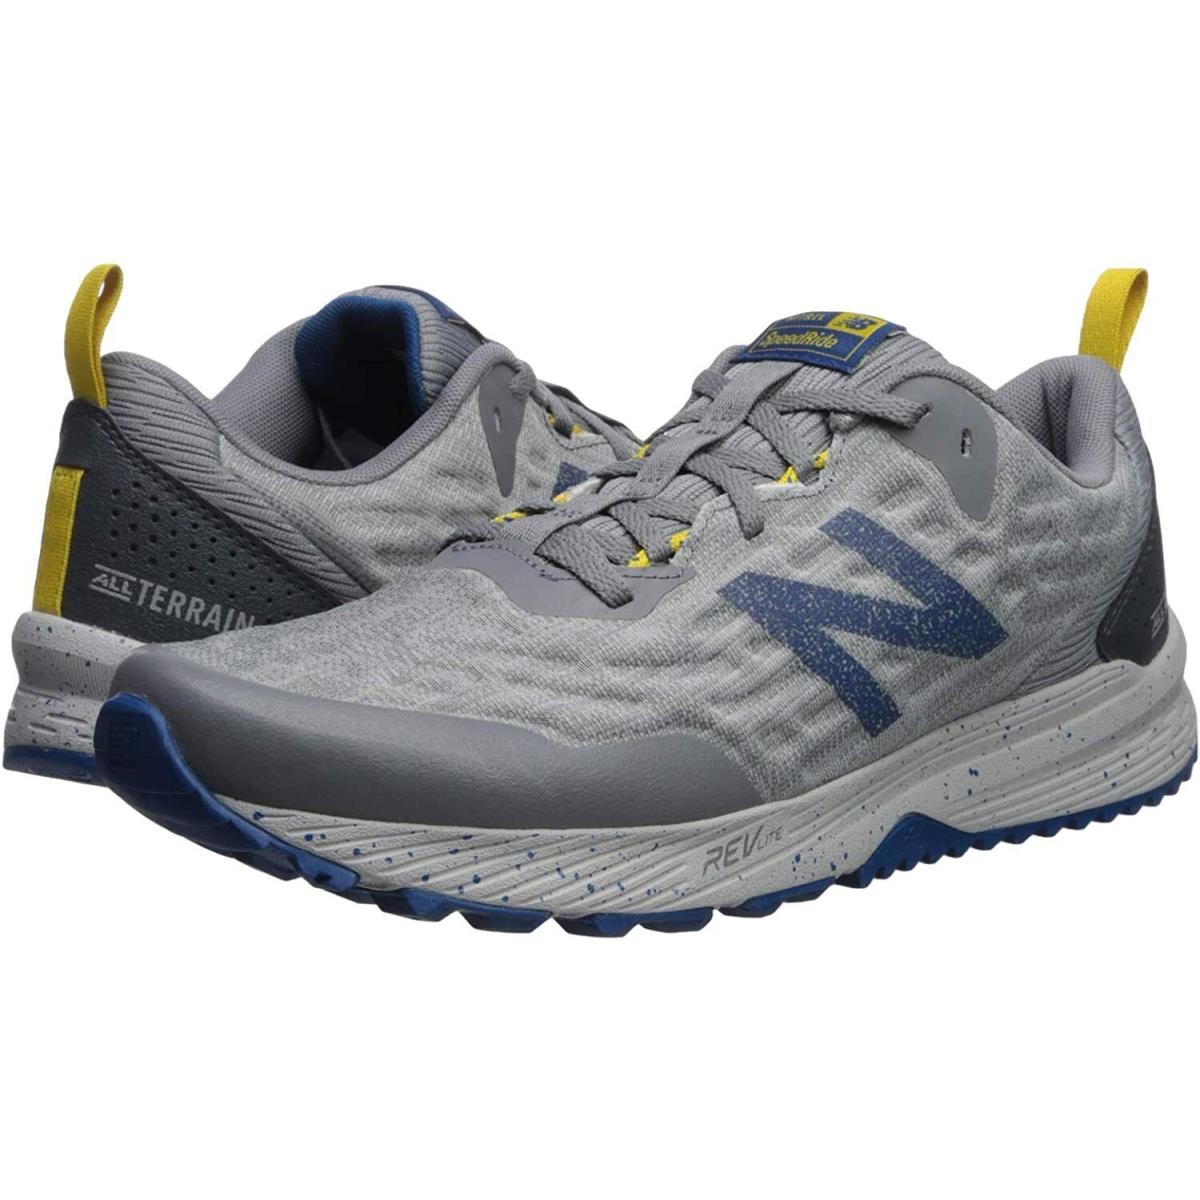 New Balance Men`s Nitrel V3 Trail Running Shoe Size 11.5 Colors Blue Gray Yel - Gray, Blue & Yellow